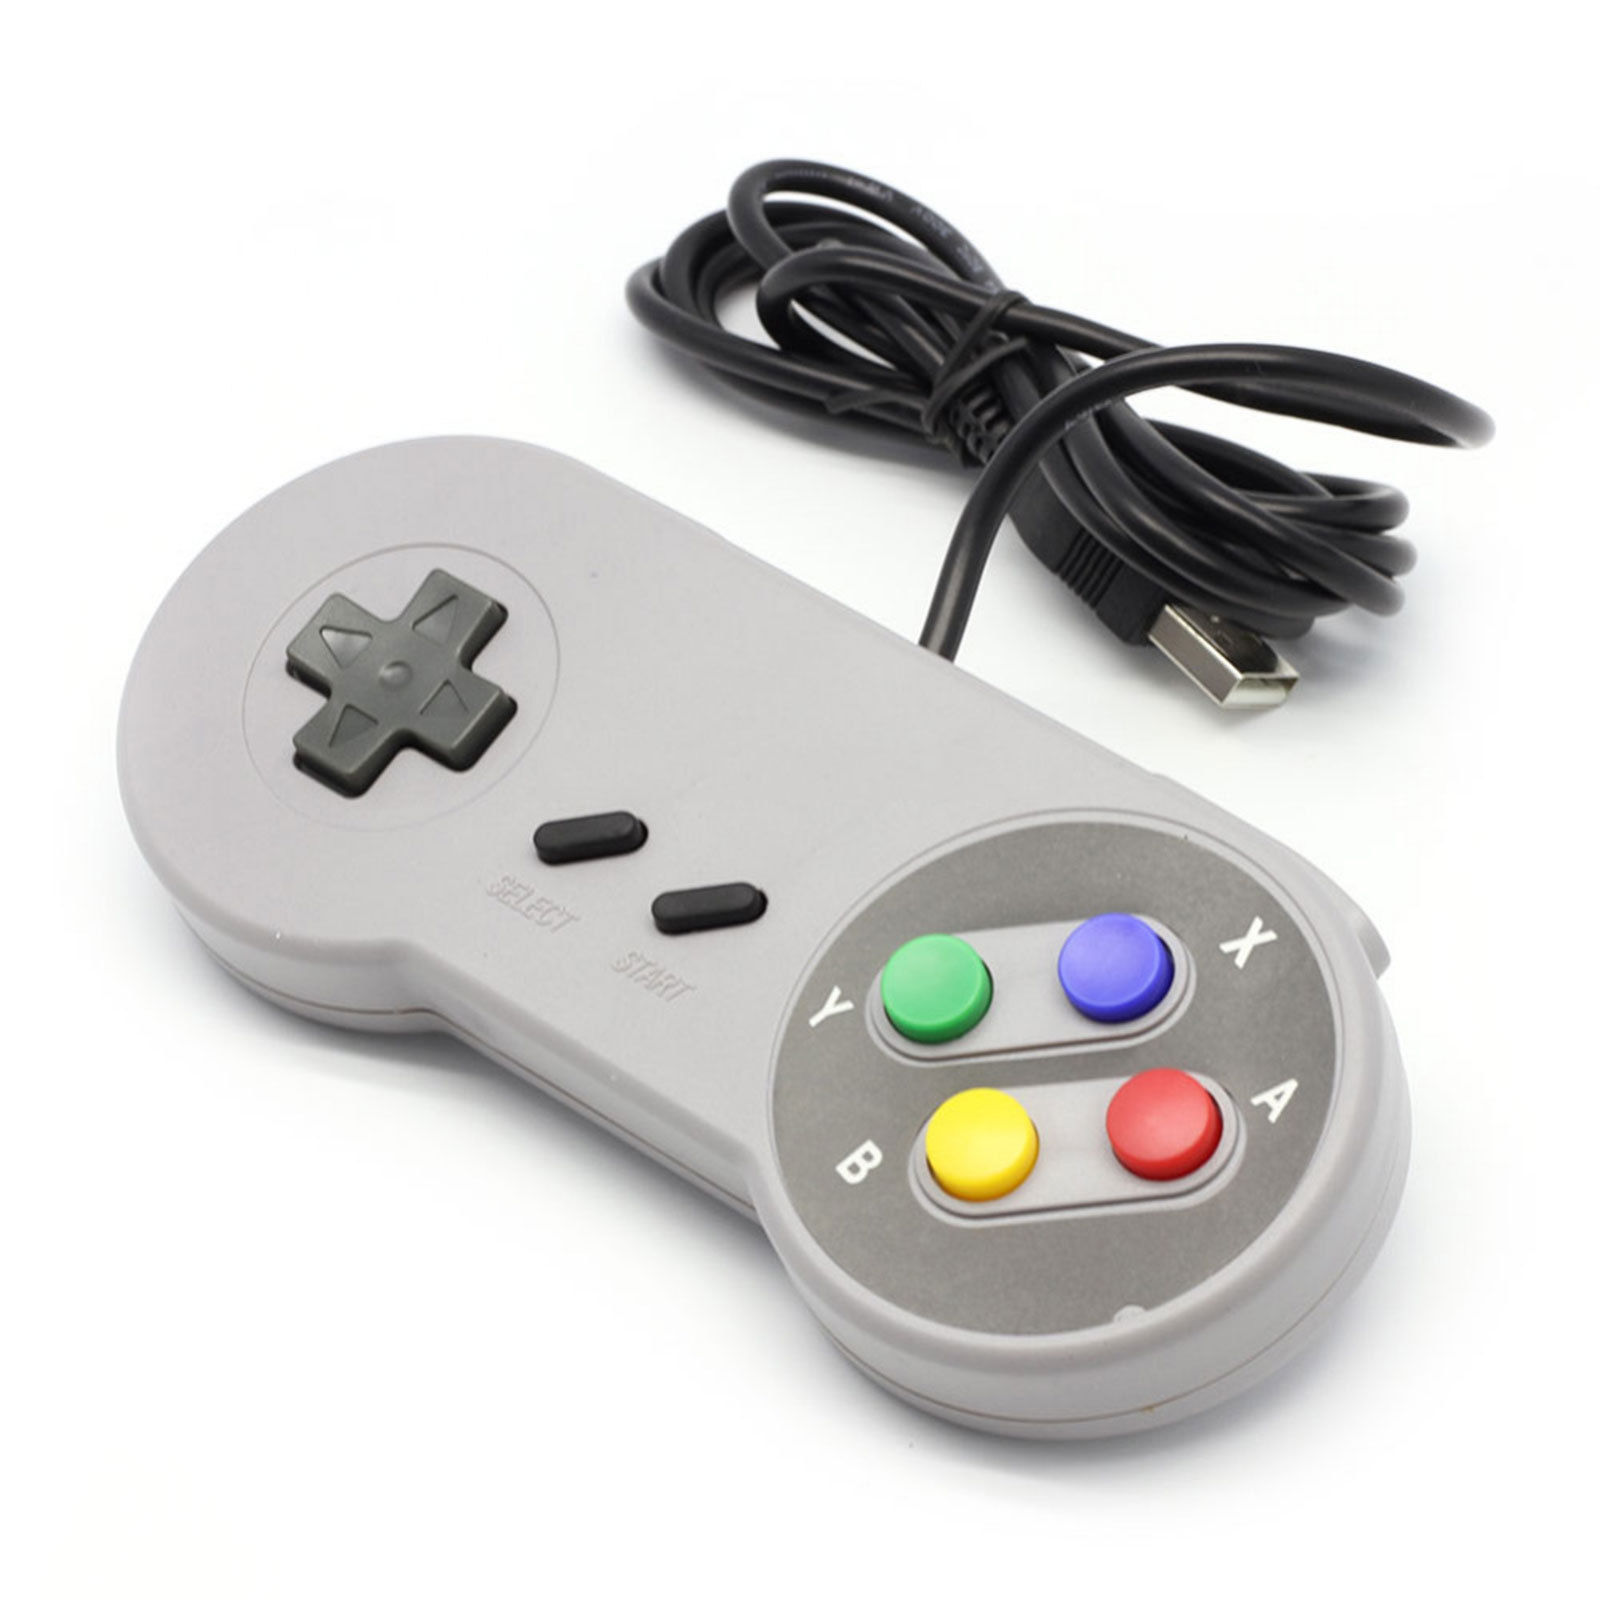 SNES Controller Gamepad USB For PC Mac Pi Super Nintendo Games Retro Classic USA Controllers